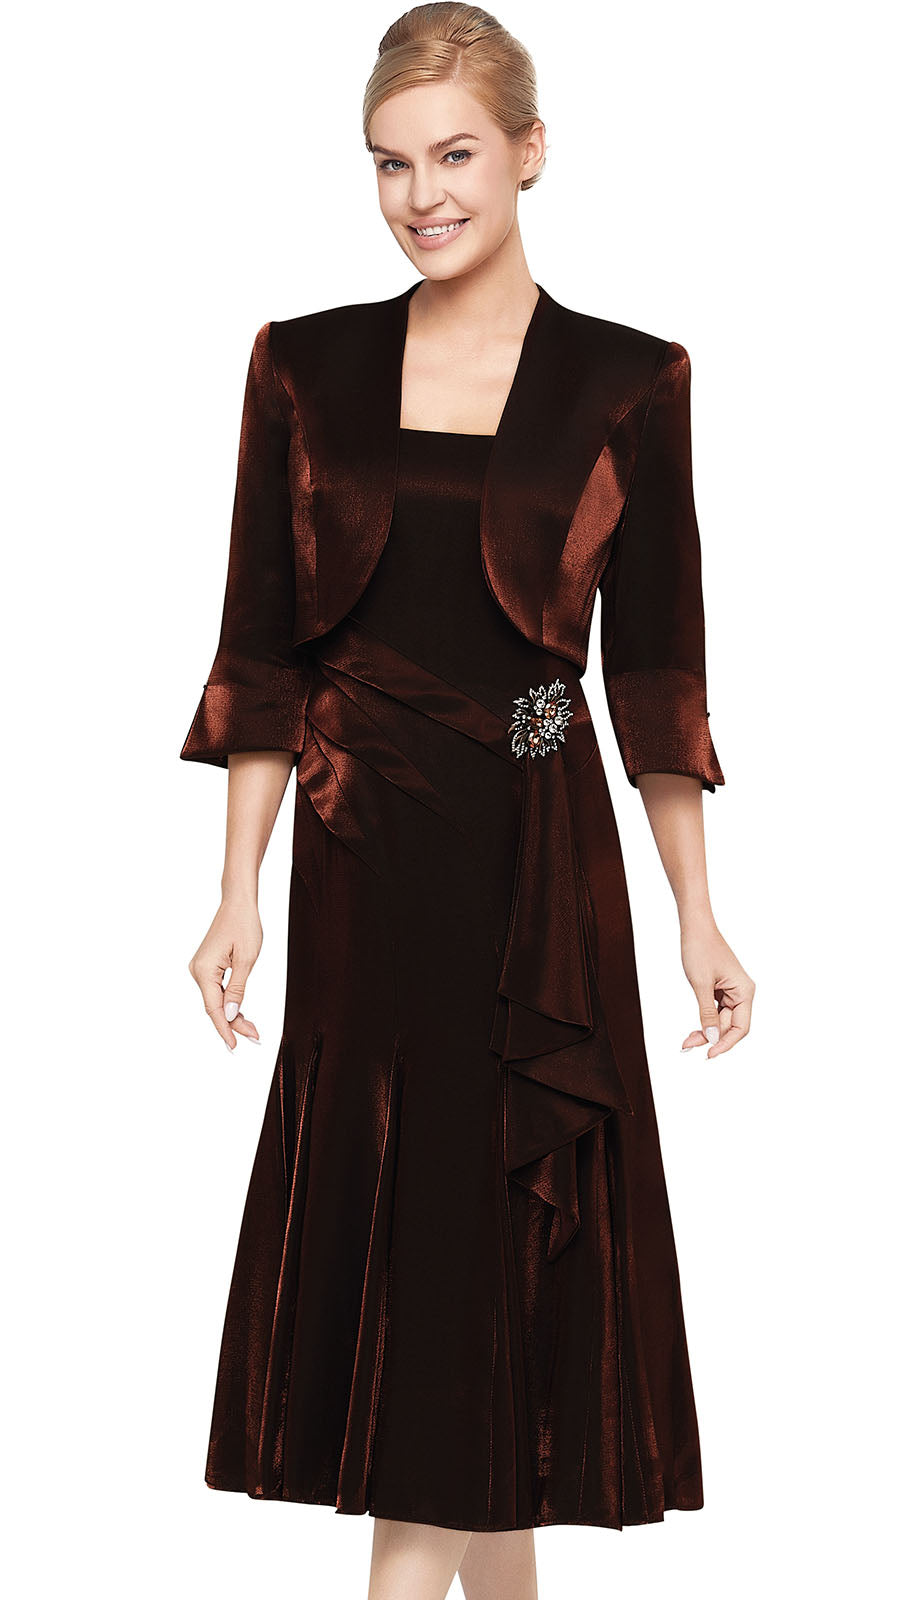 Nina Massini Church Dress 2680-Copper - Church Suits For Less